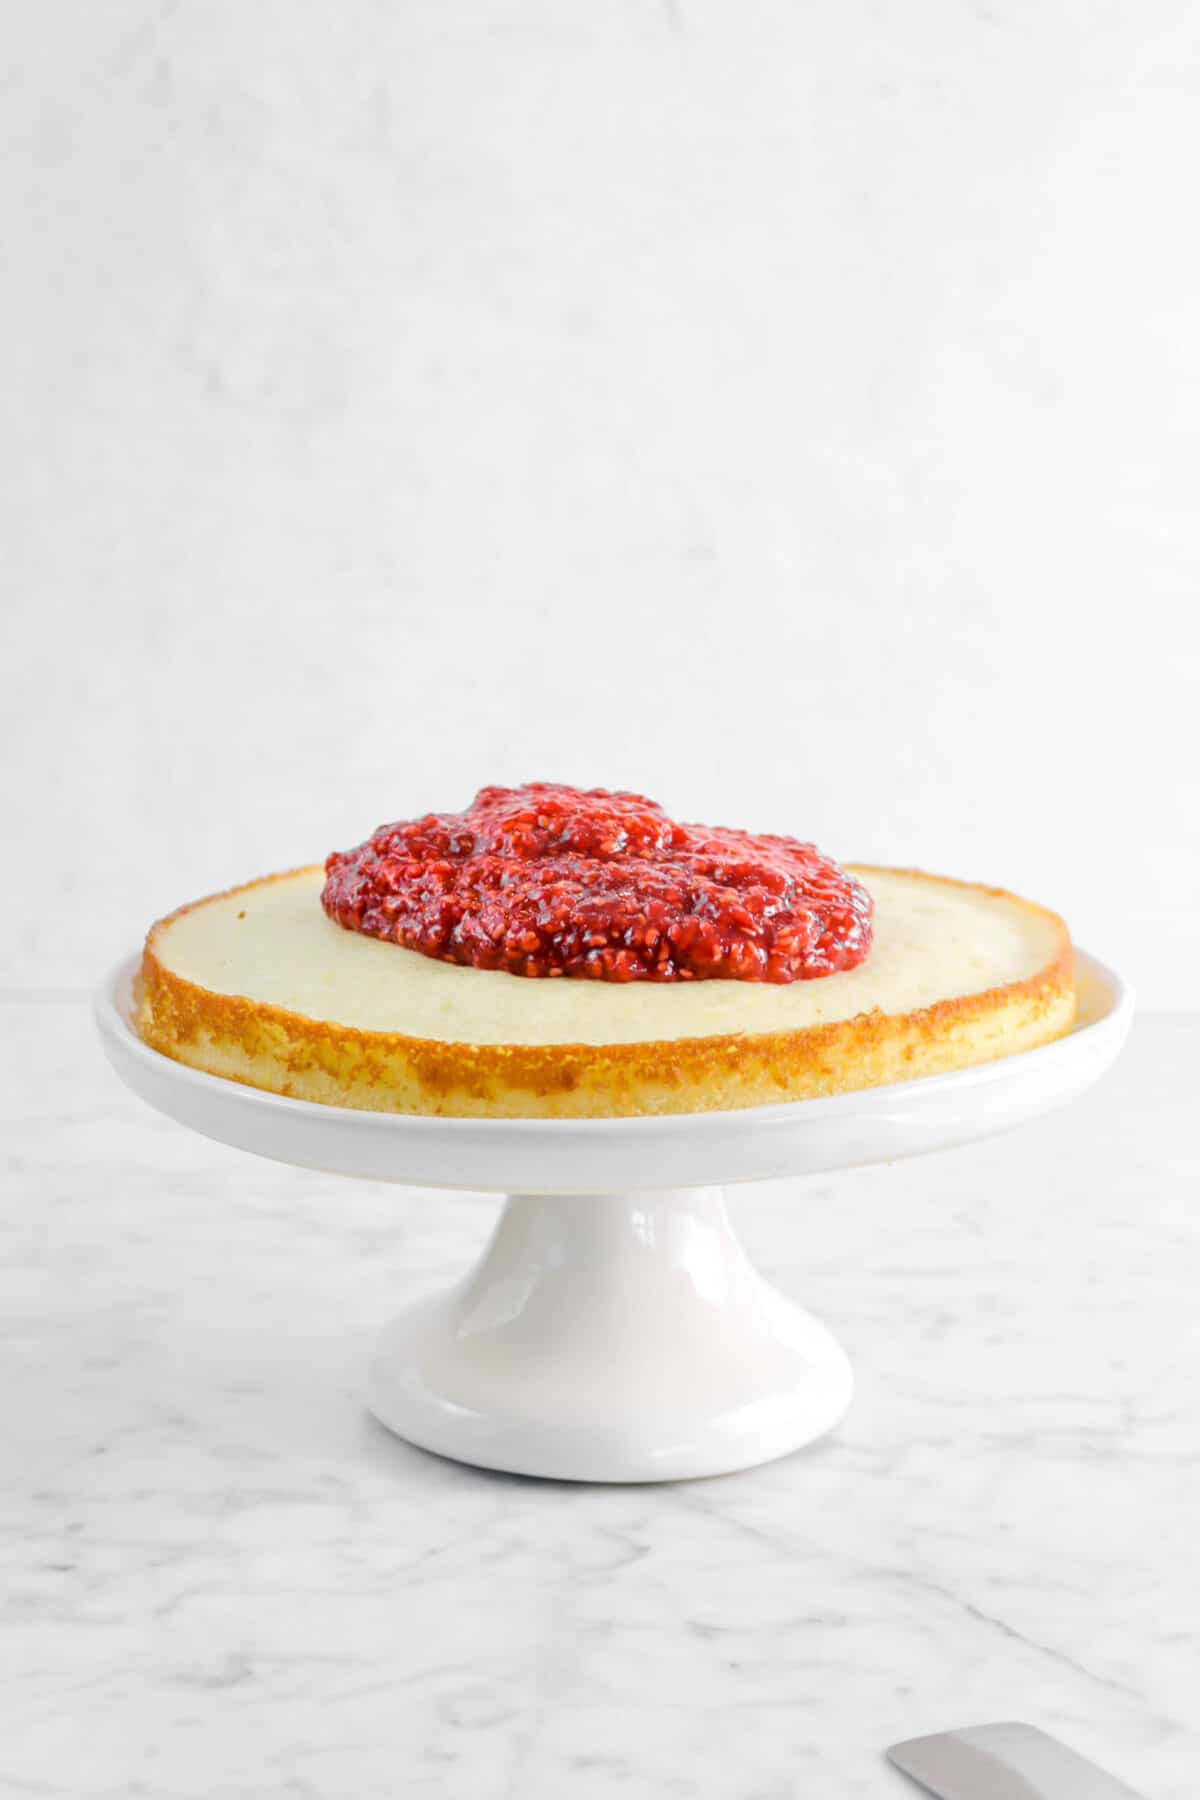 raspberry jam added to cake layer